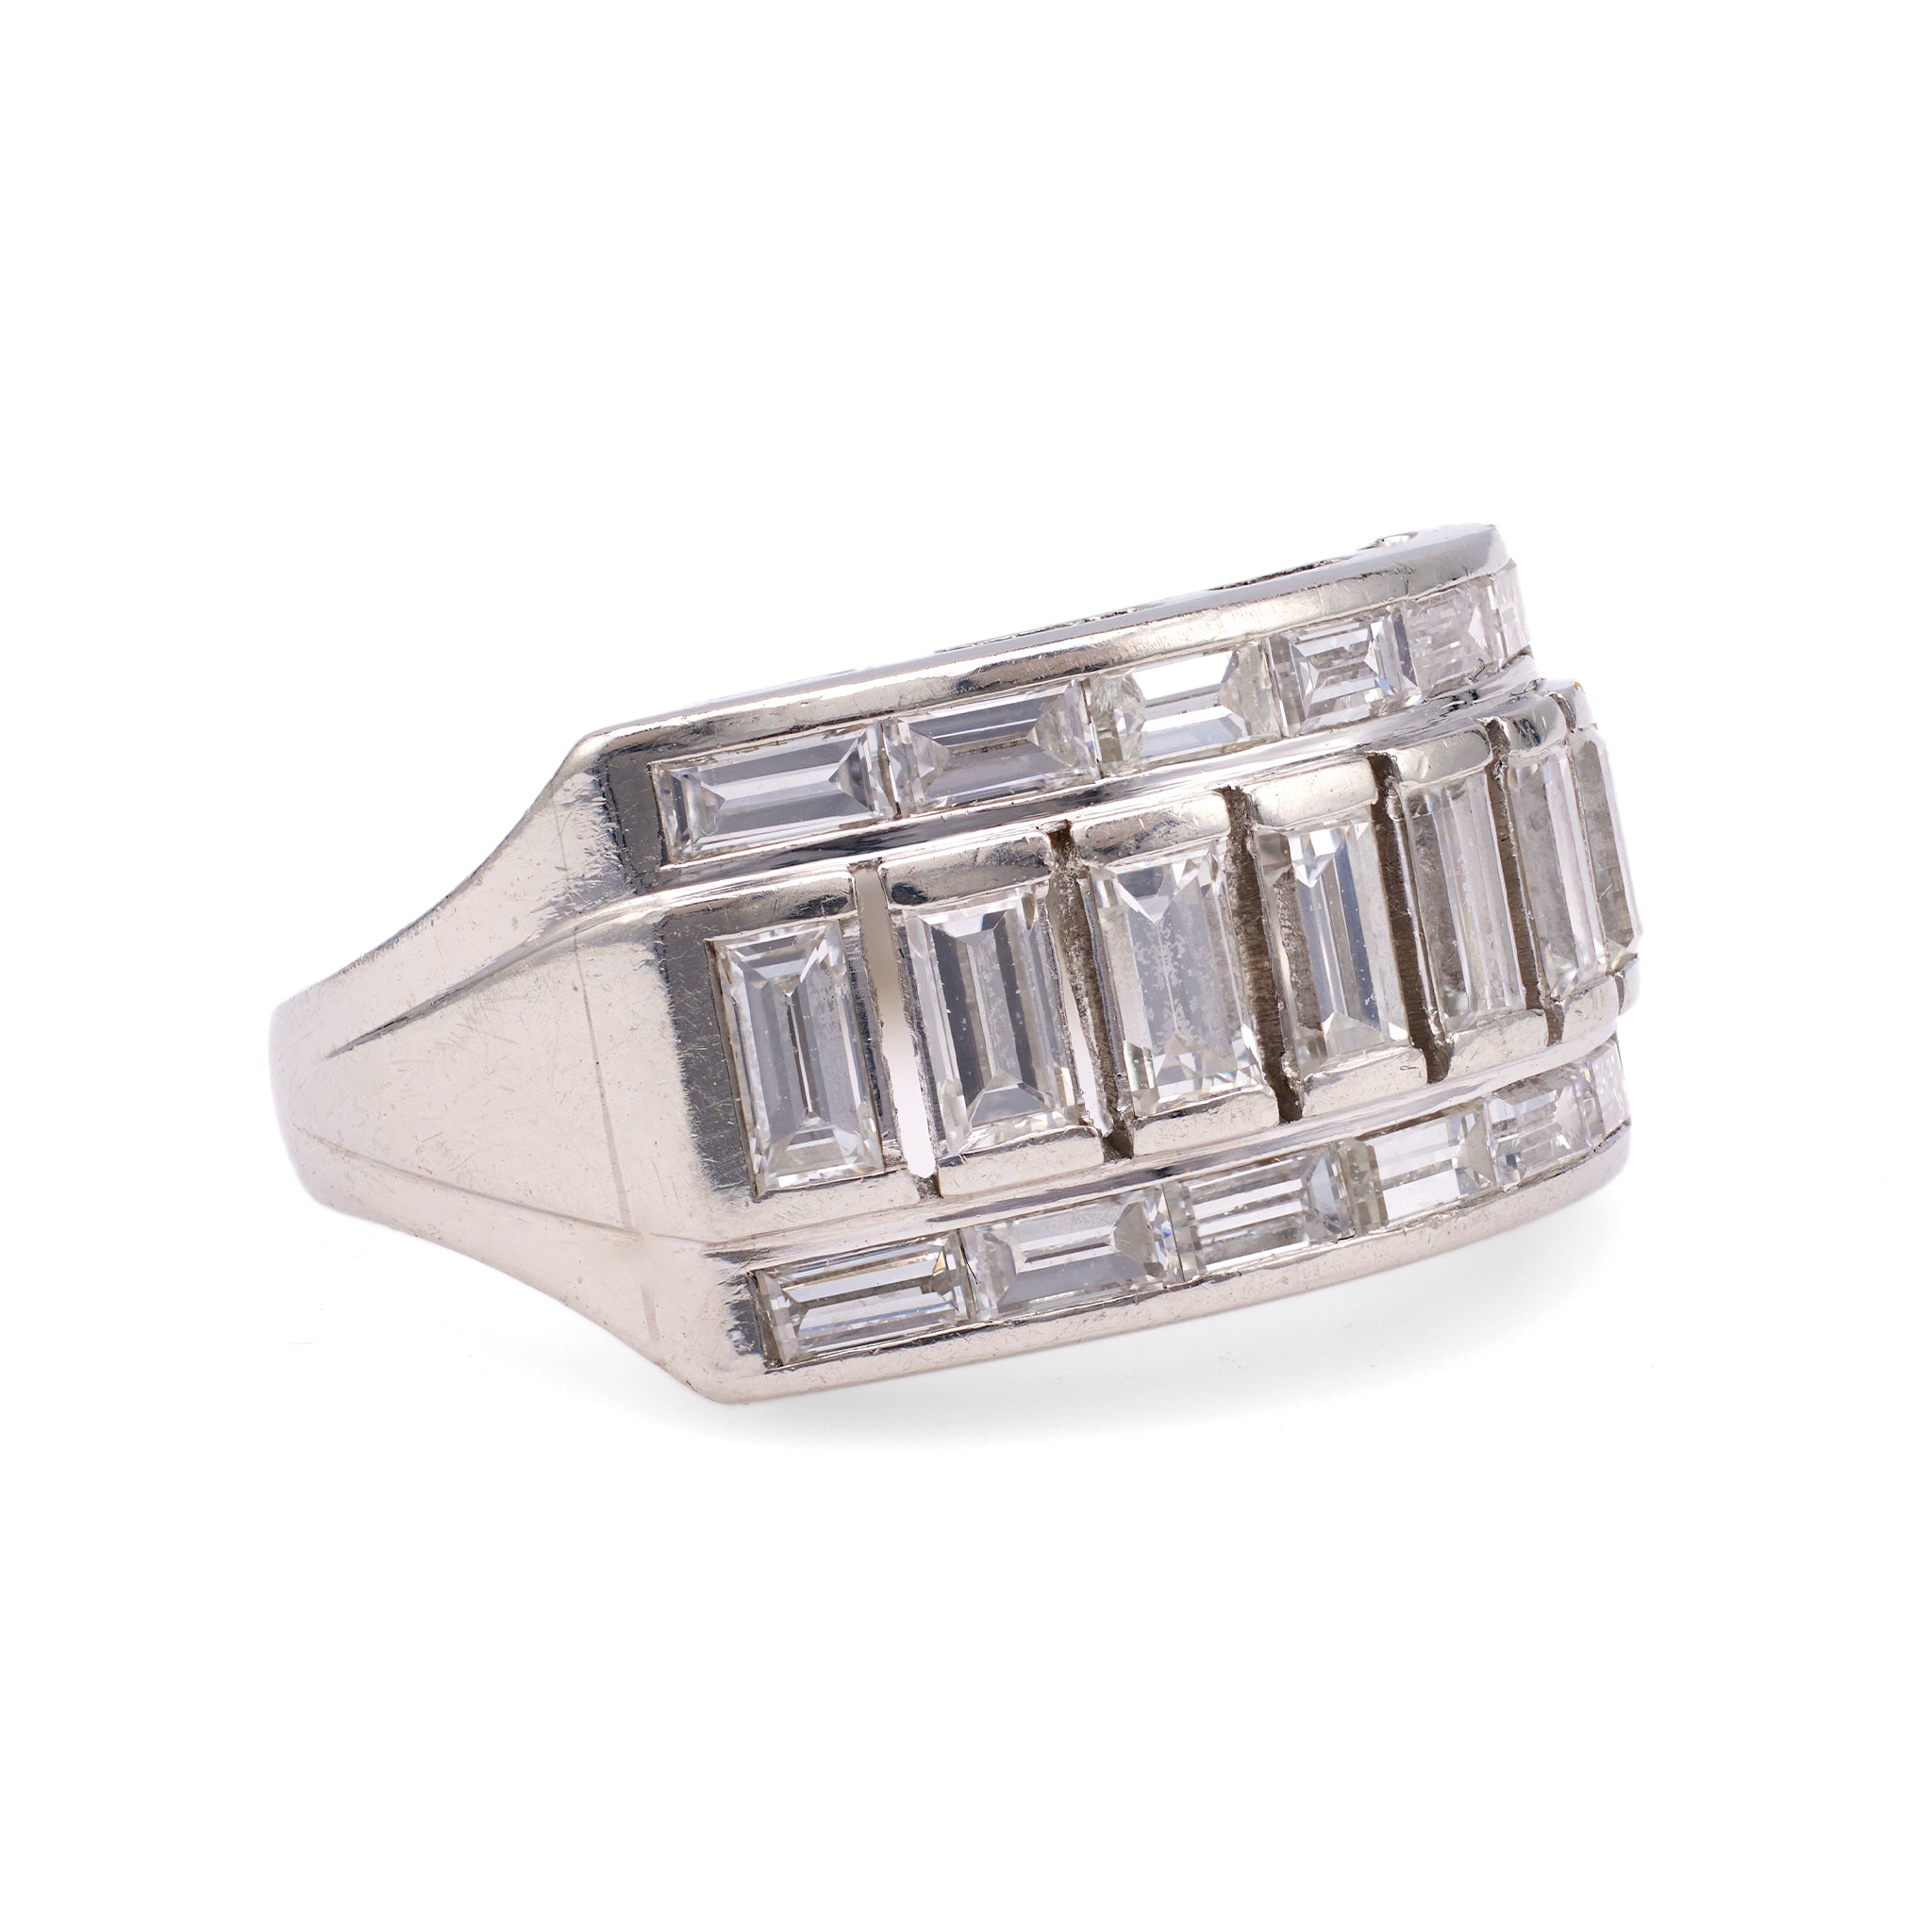 Art Deco Baguette Cut Diamond Platinum Ring Rings Jack Weir & Sons   